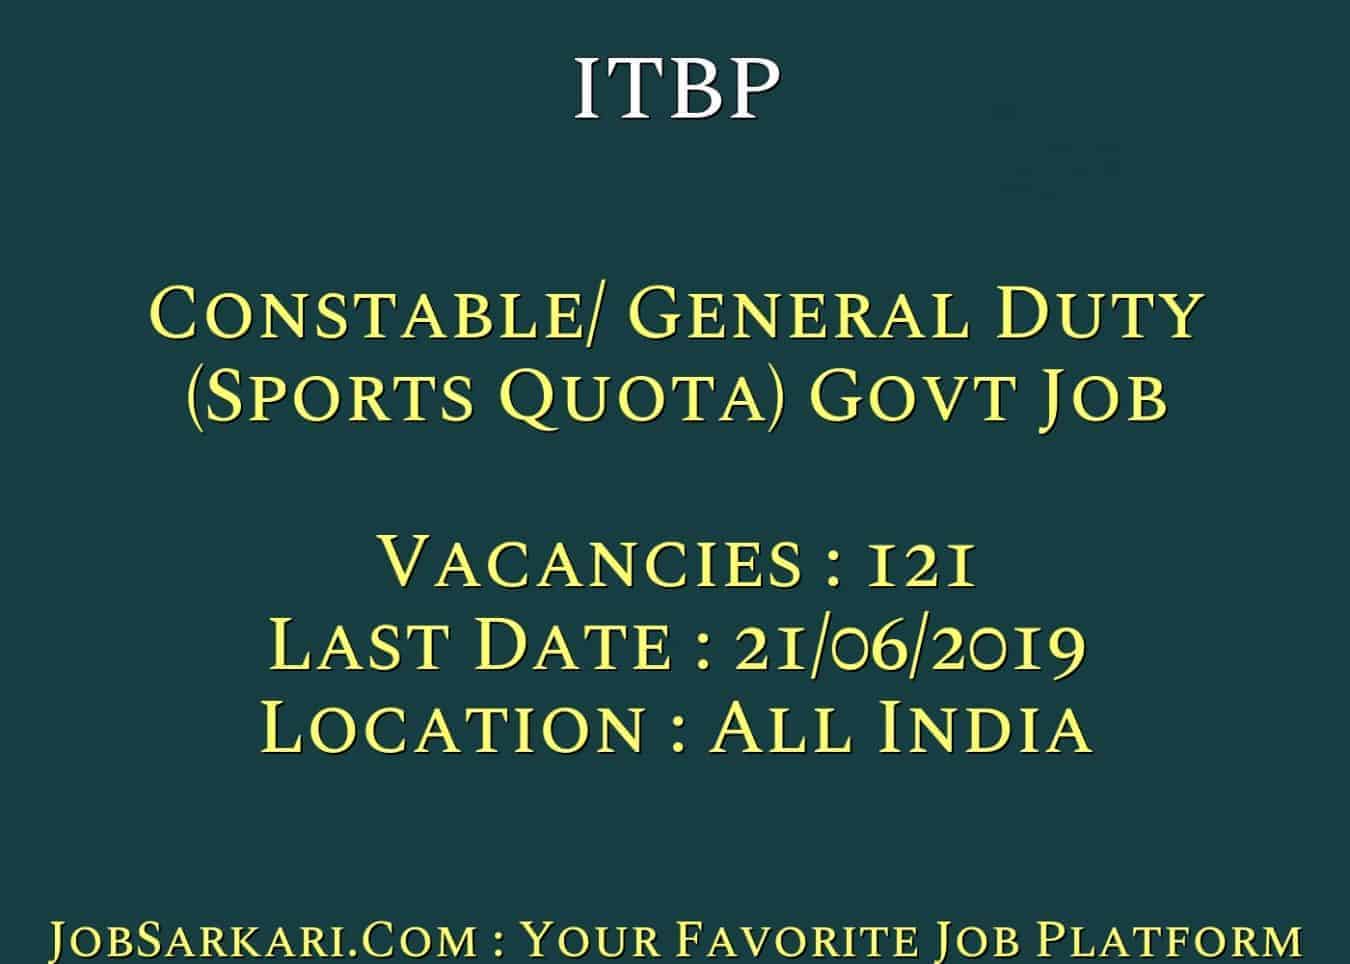 ITBP Recruitment 2019 For Constable/ General Duty (Sports Quota) Govt Job